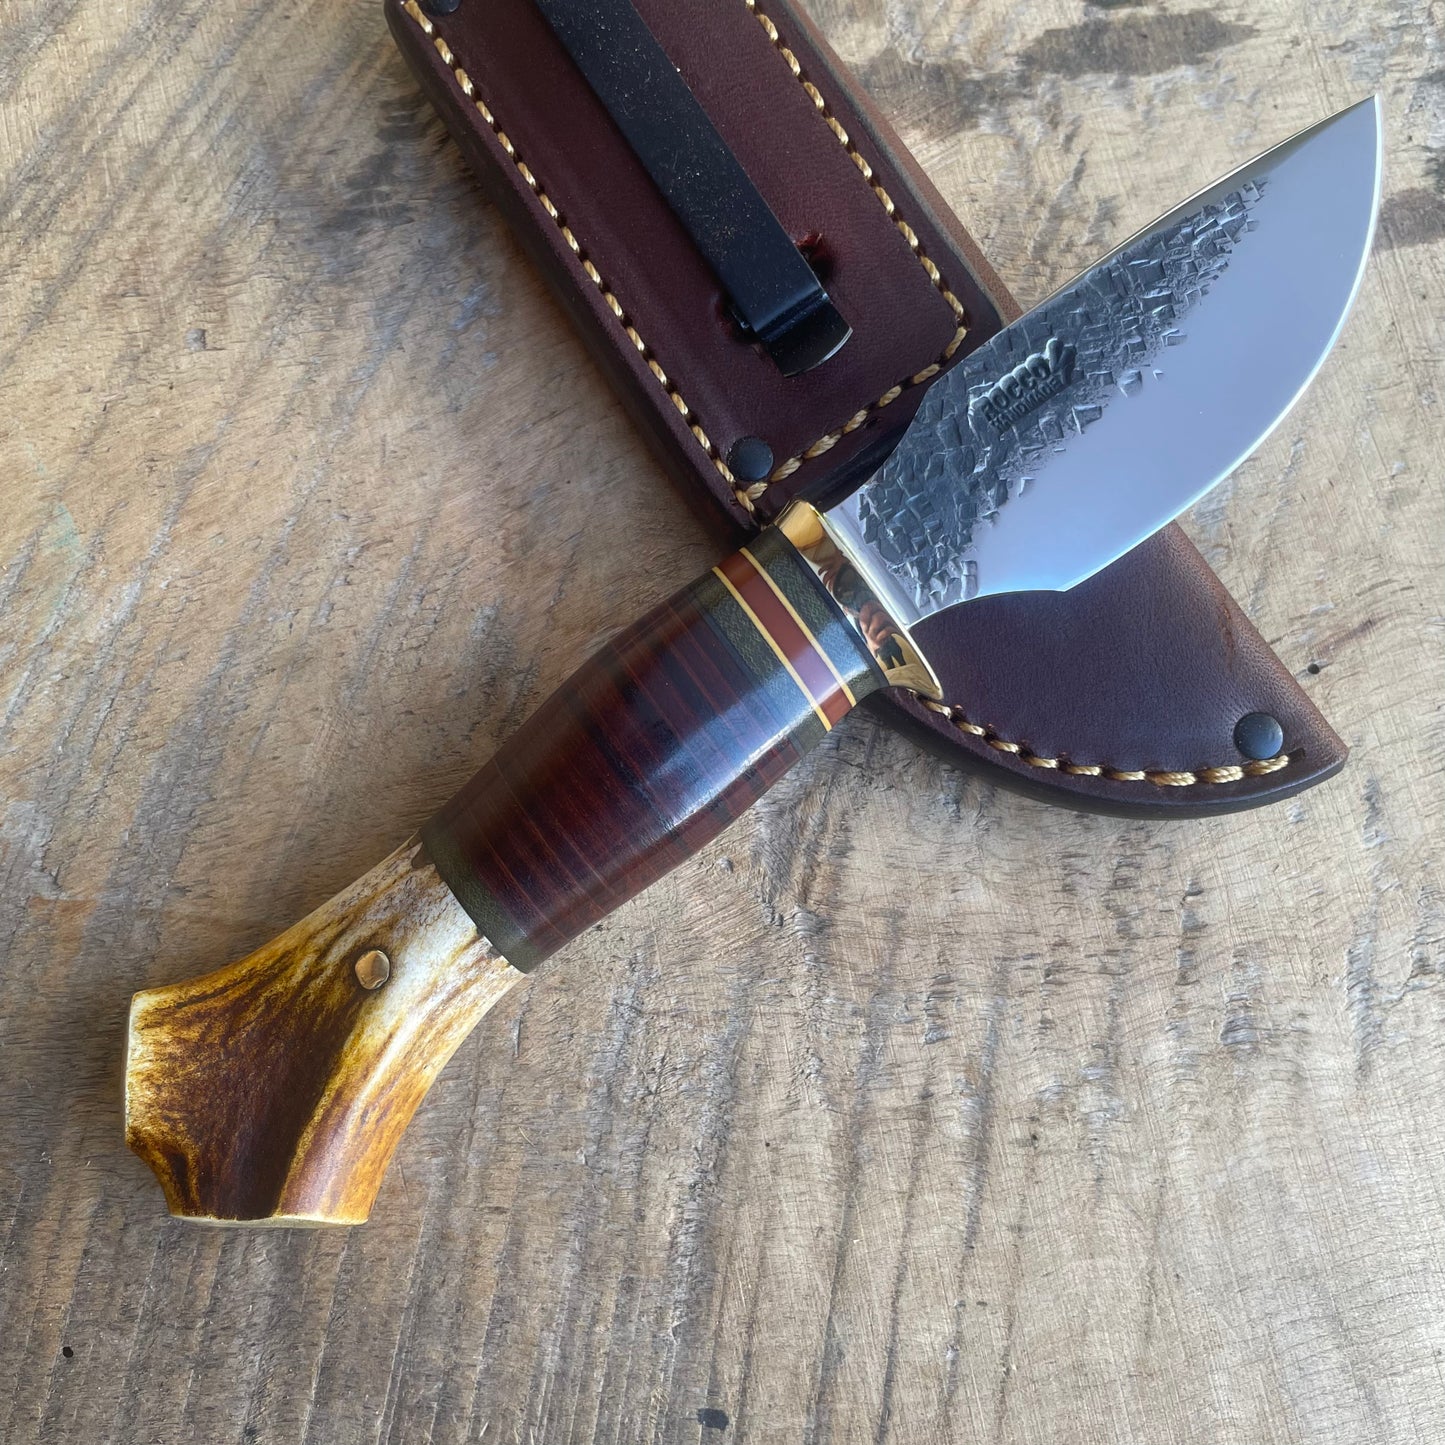 Scagel Style Alaskan Pocket Knife